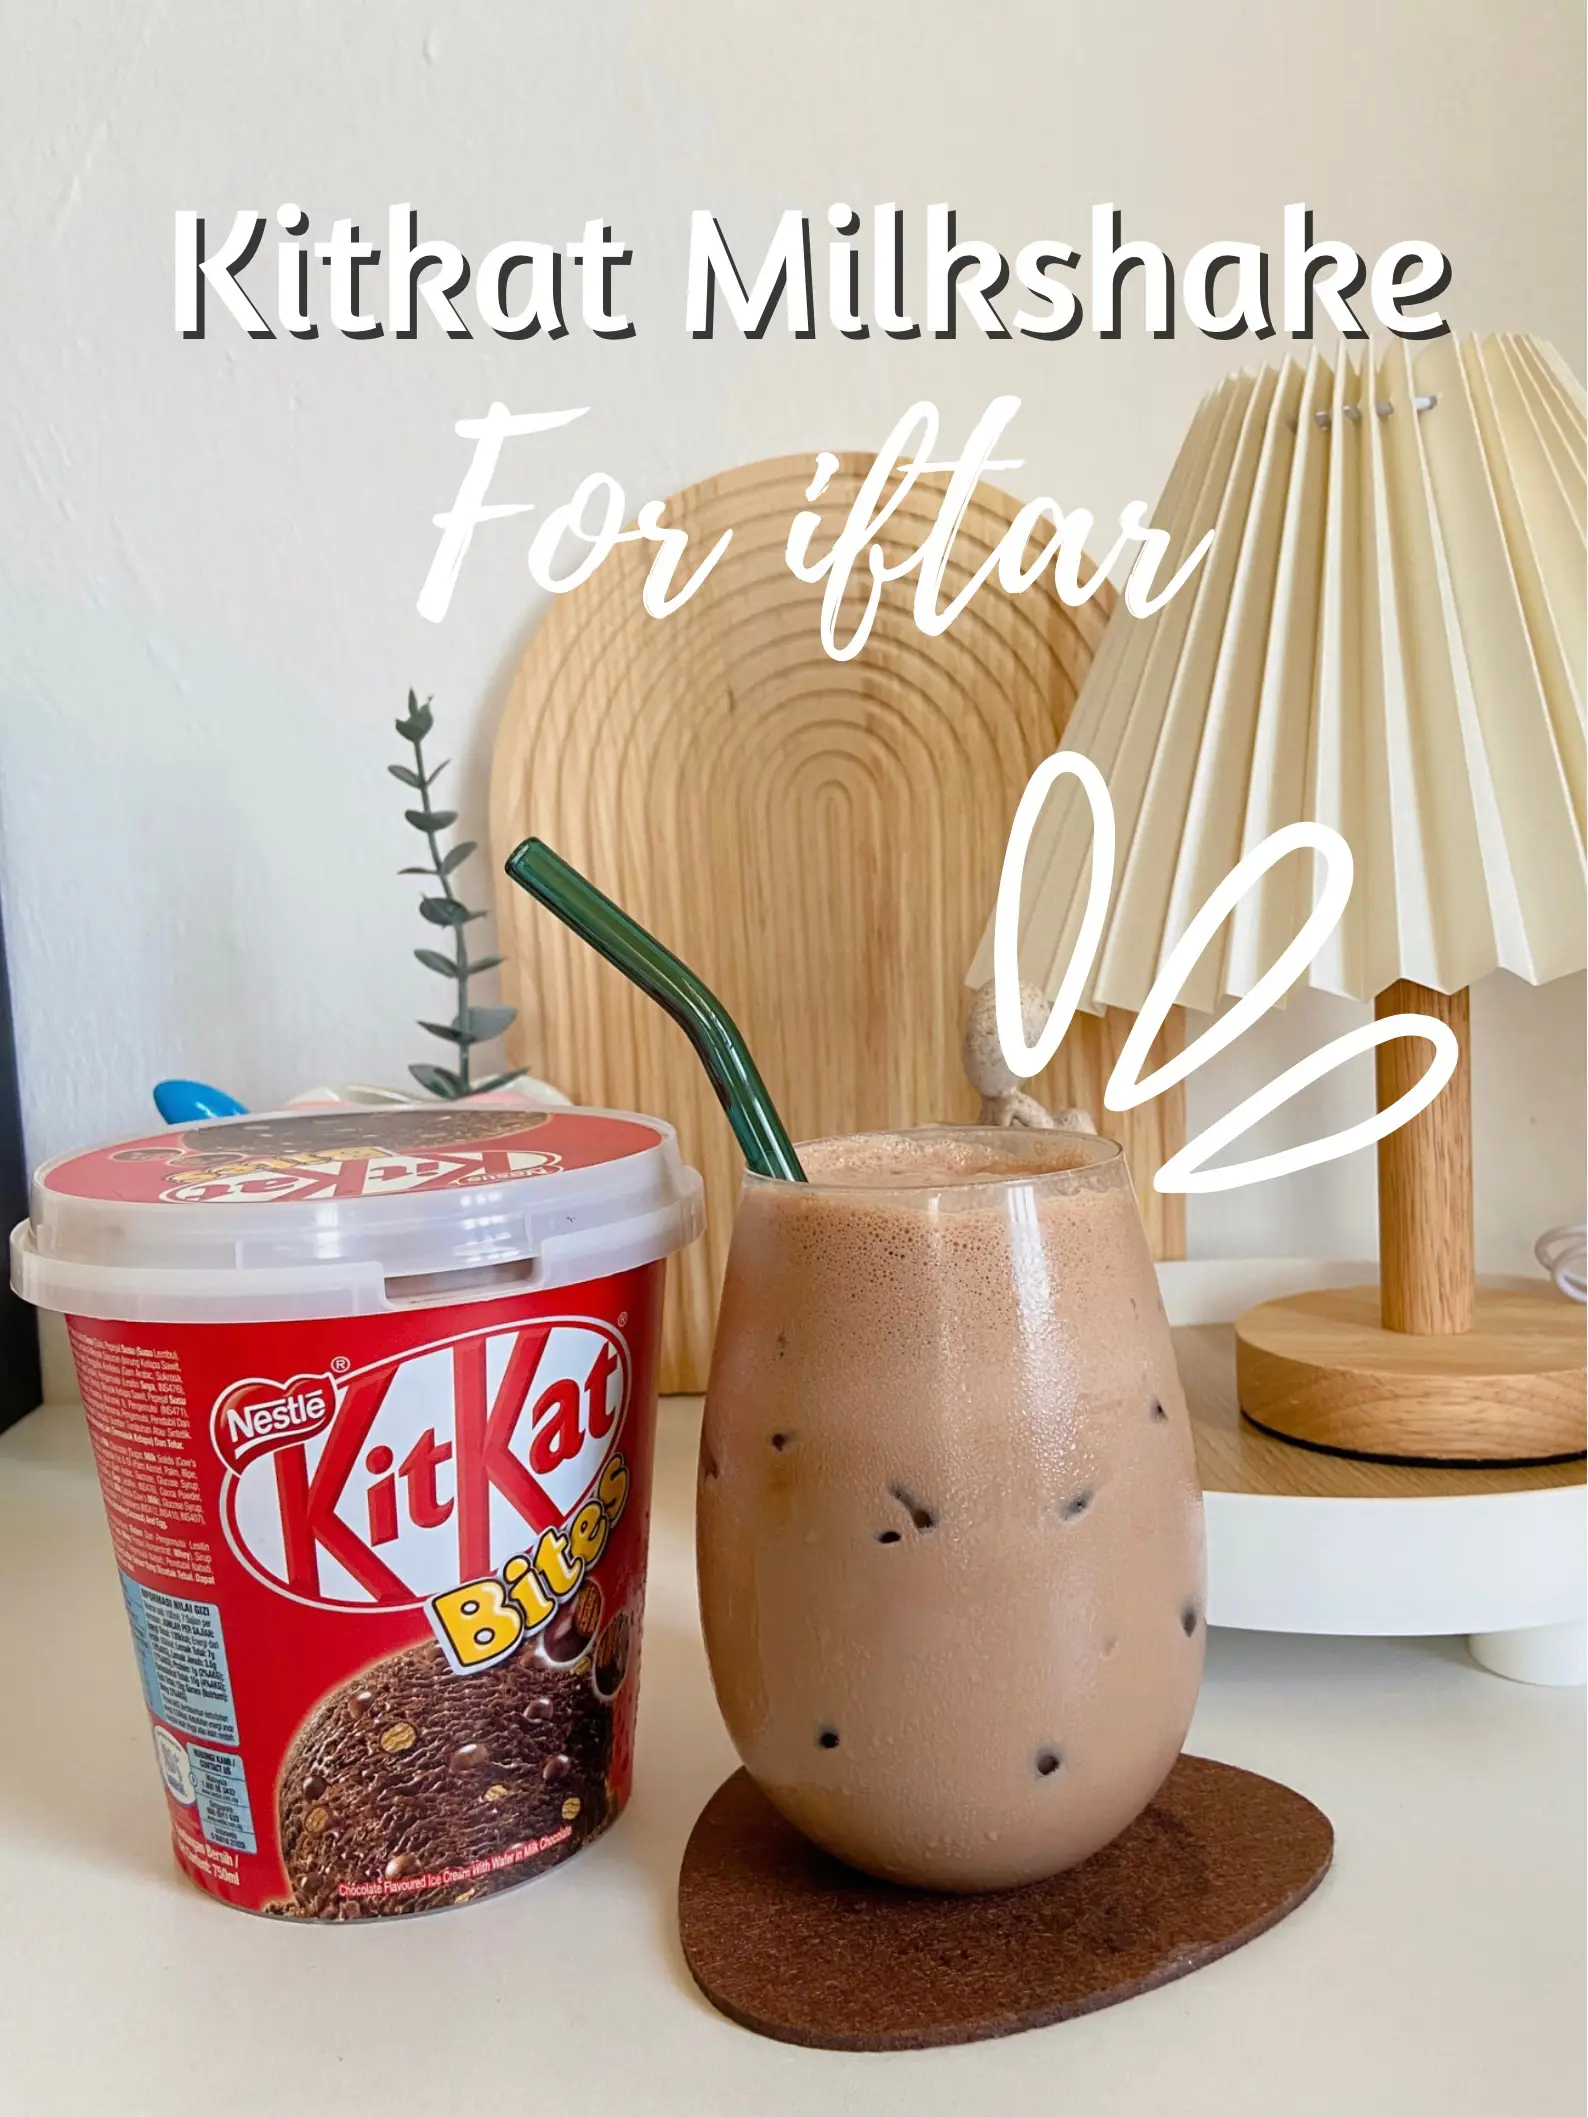 Creamy KitKat Shake Recipe: How to Make Creamy KitKat Shake Recipe